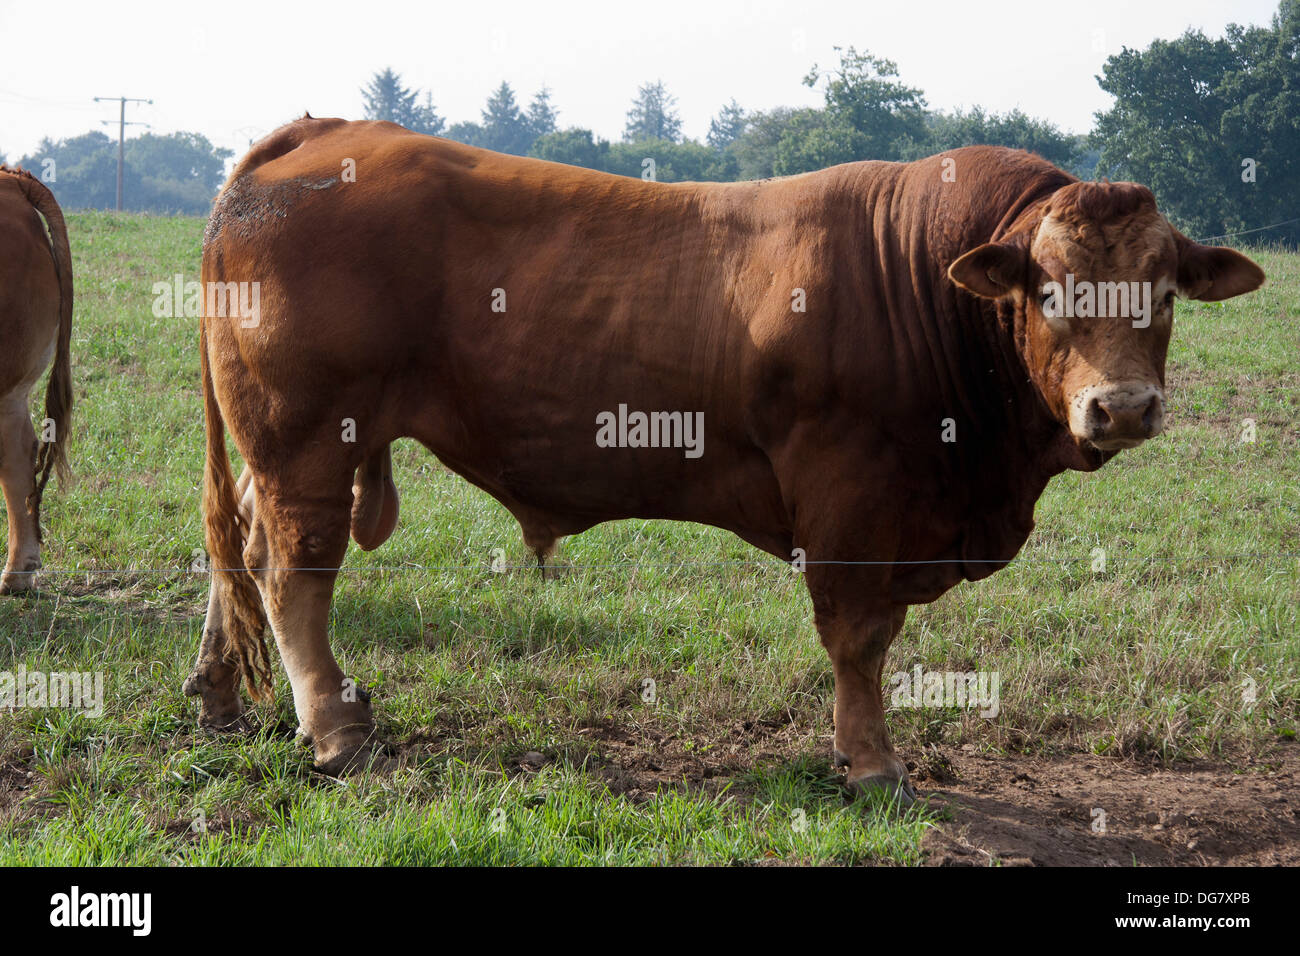 Bull, country scene Stock Photo